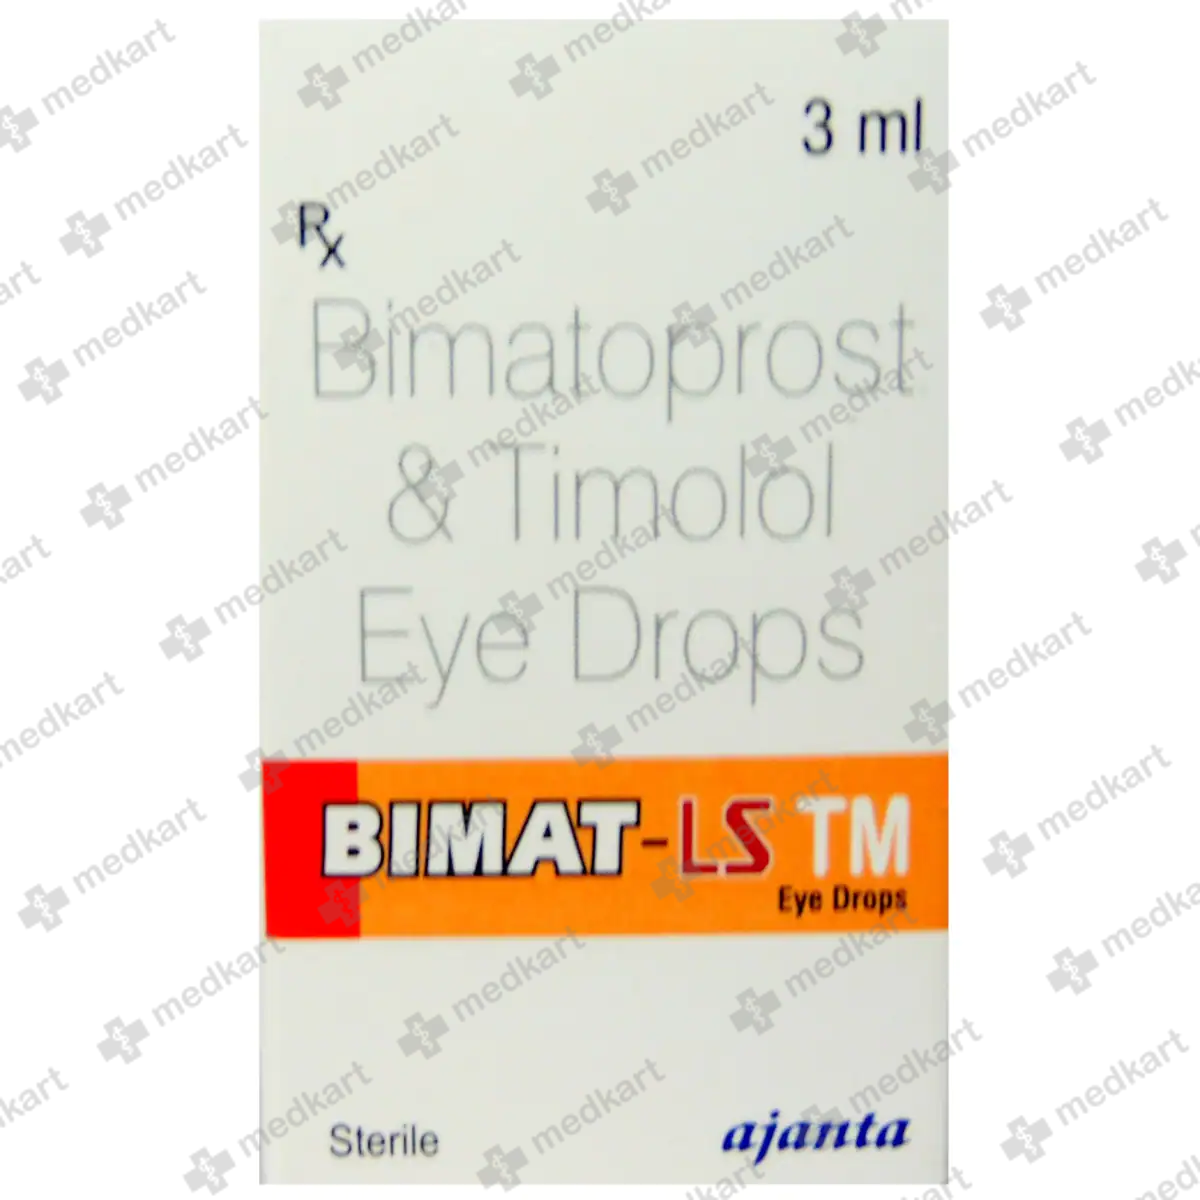 bimat-ls-tm-eye-drops-3-ml